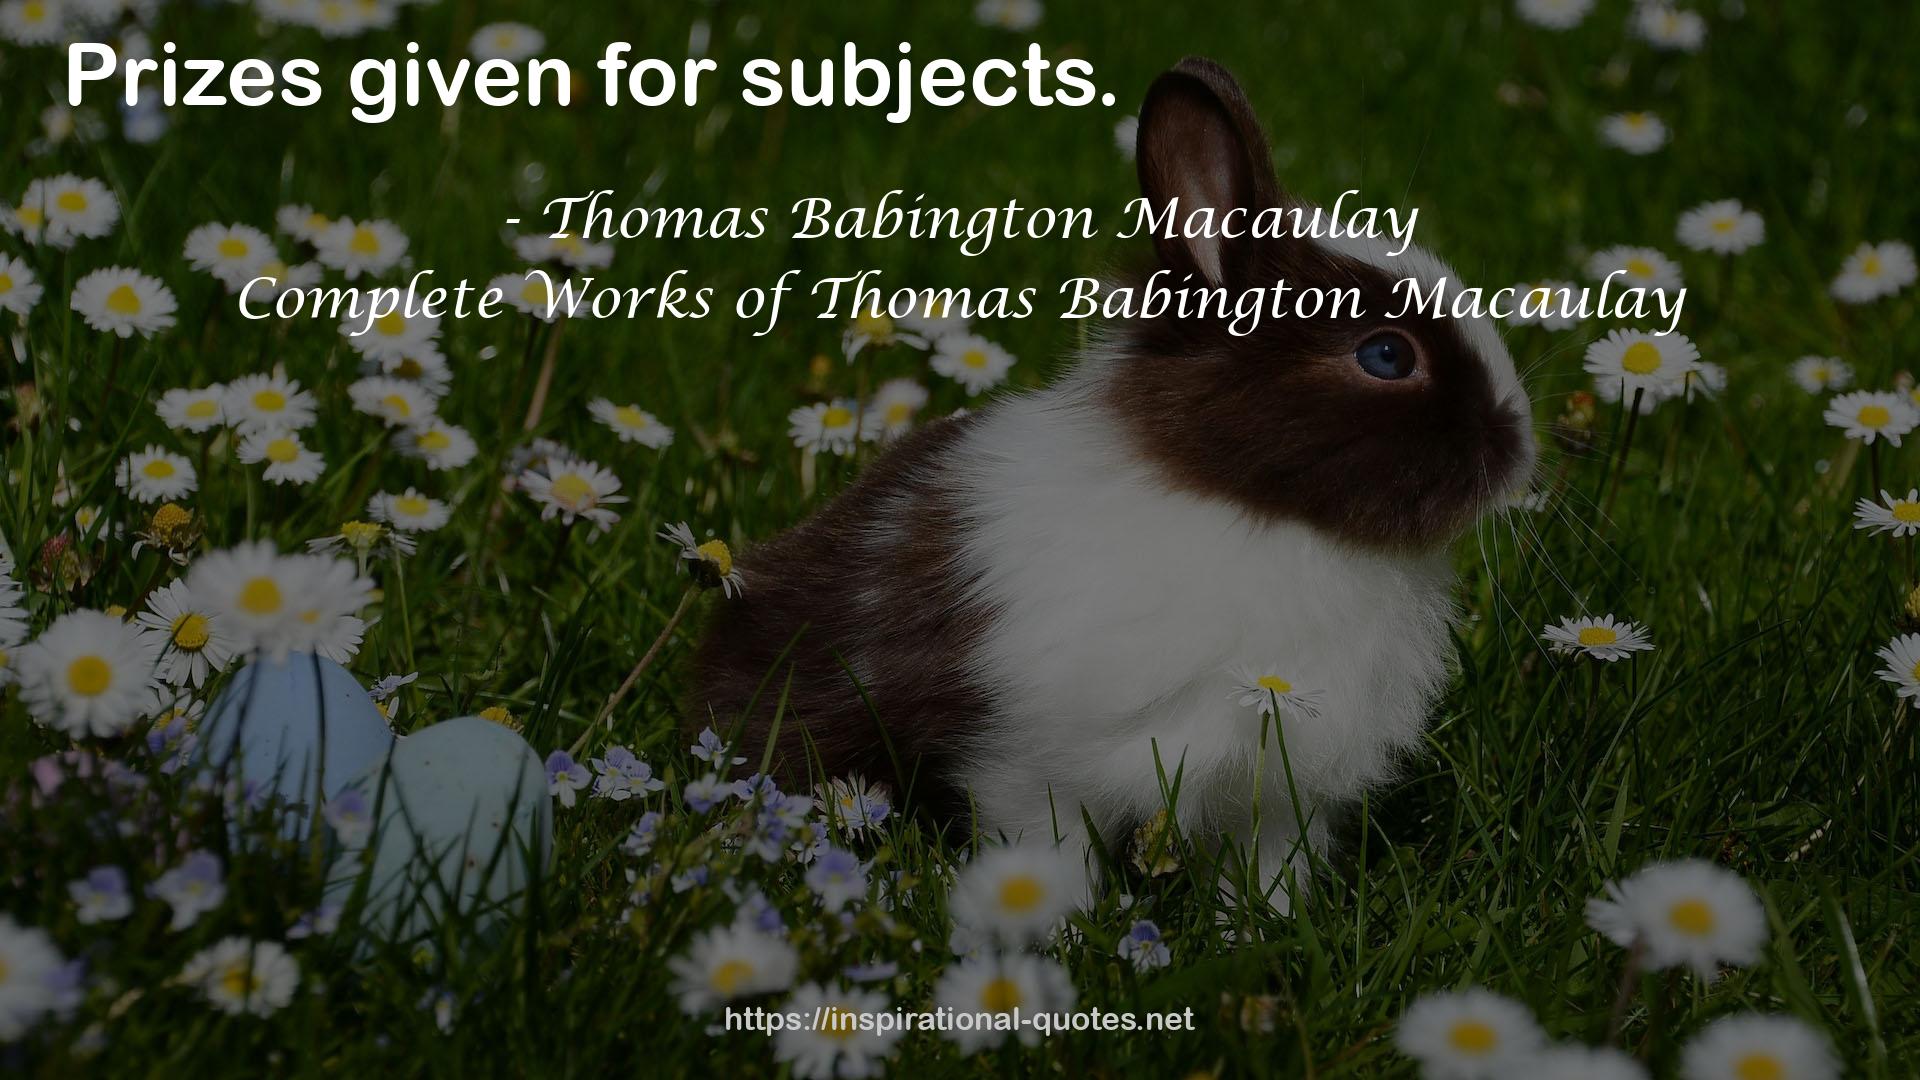 Complete Works of Thomas Babington Macaulay QUOTES